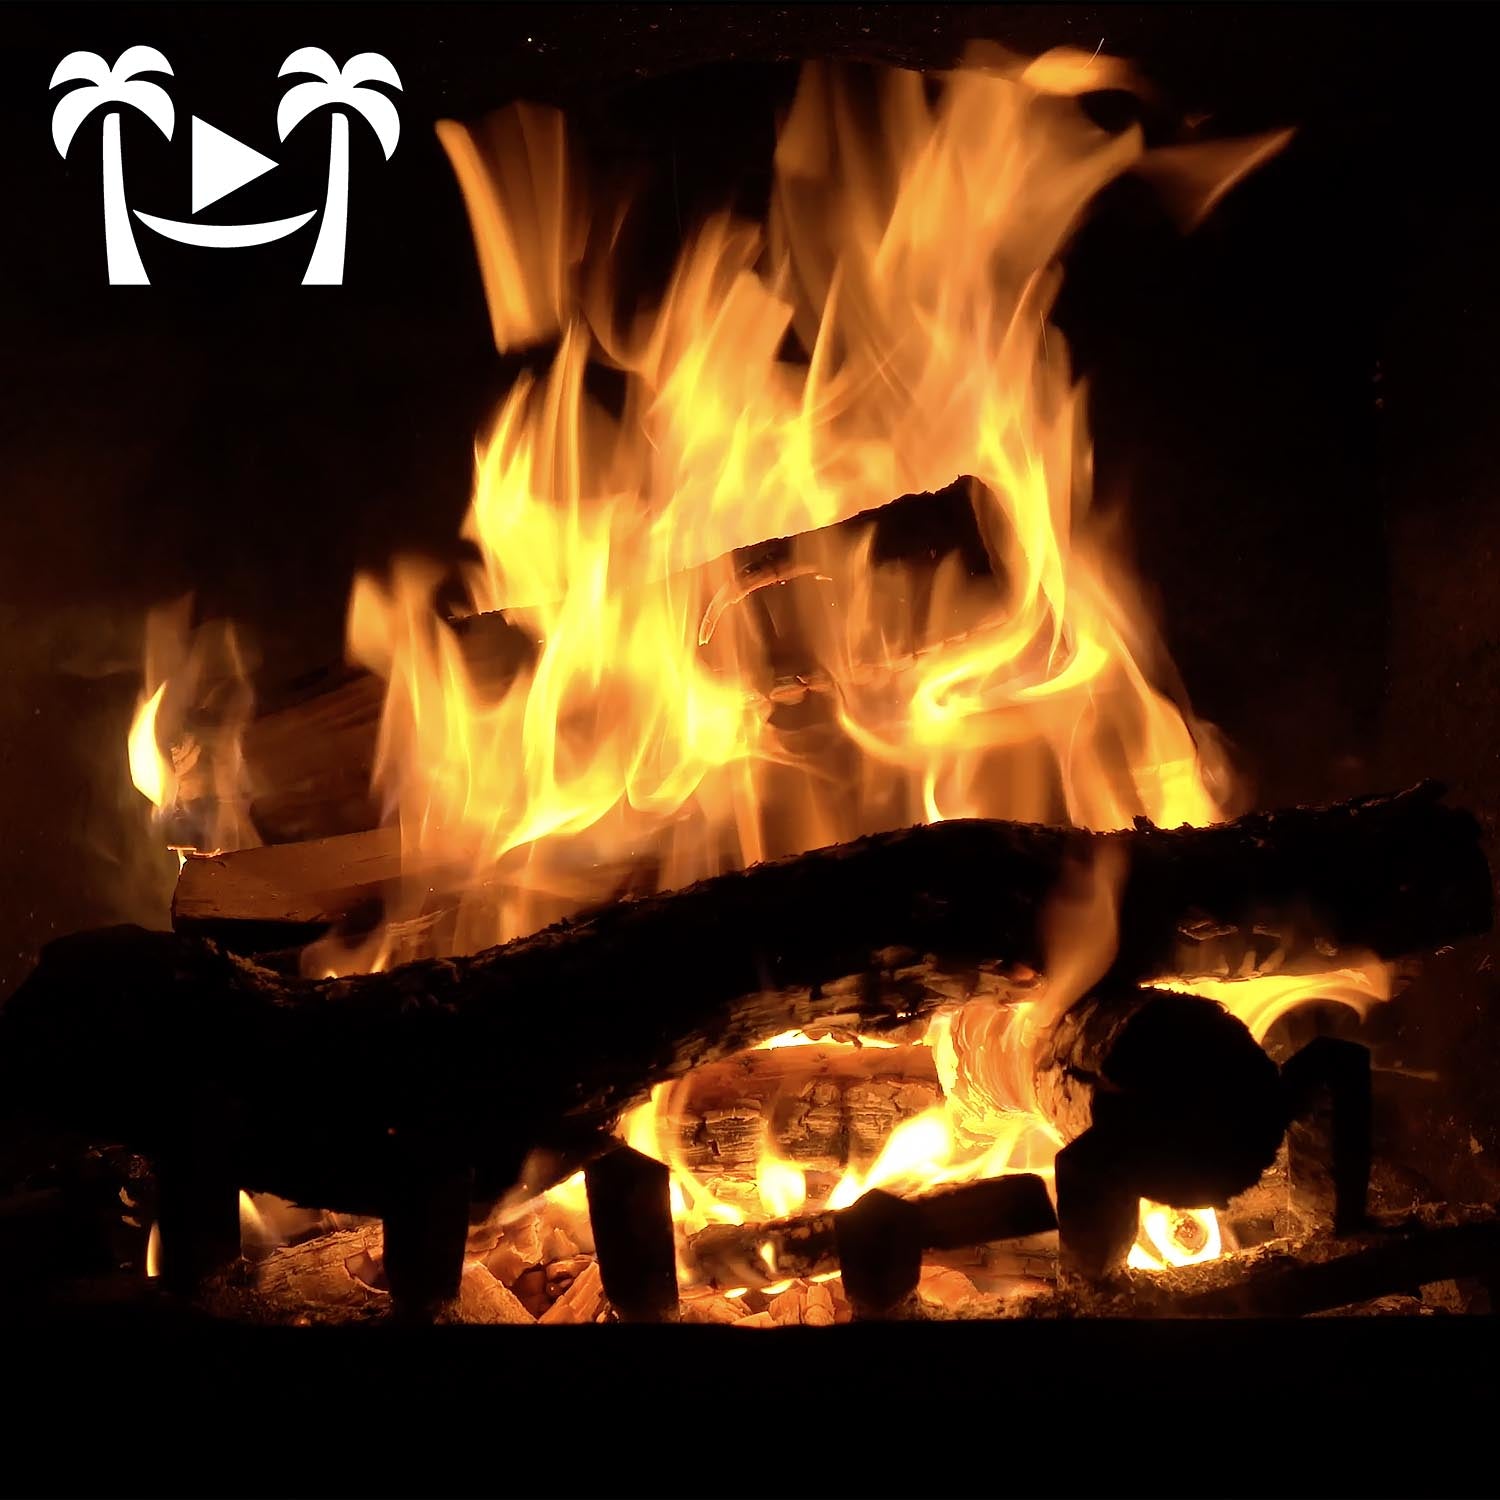 4K Crackling Fireplace Video Scene 2 or 4 Hour Screensaver